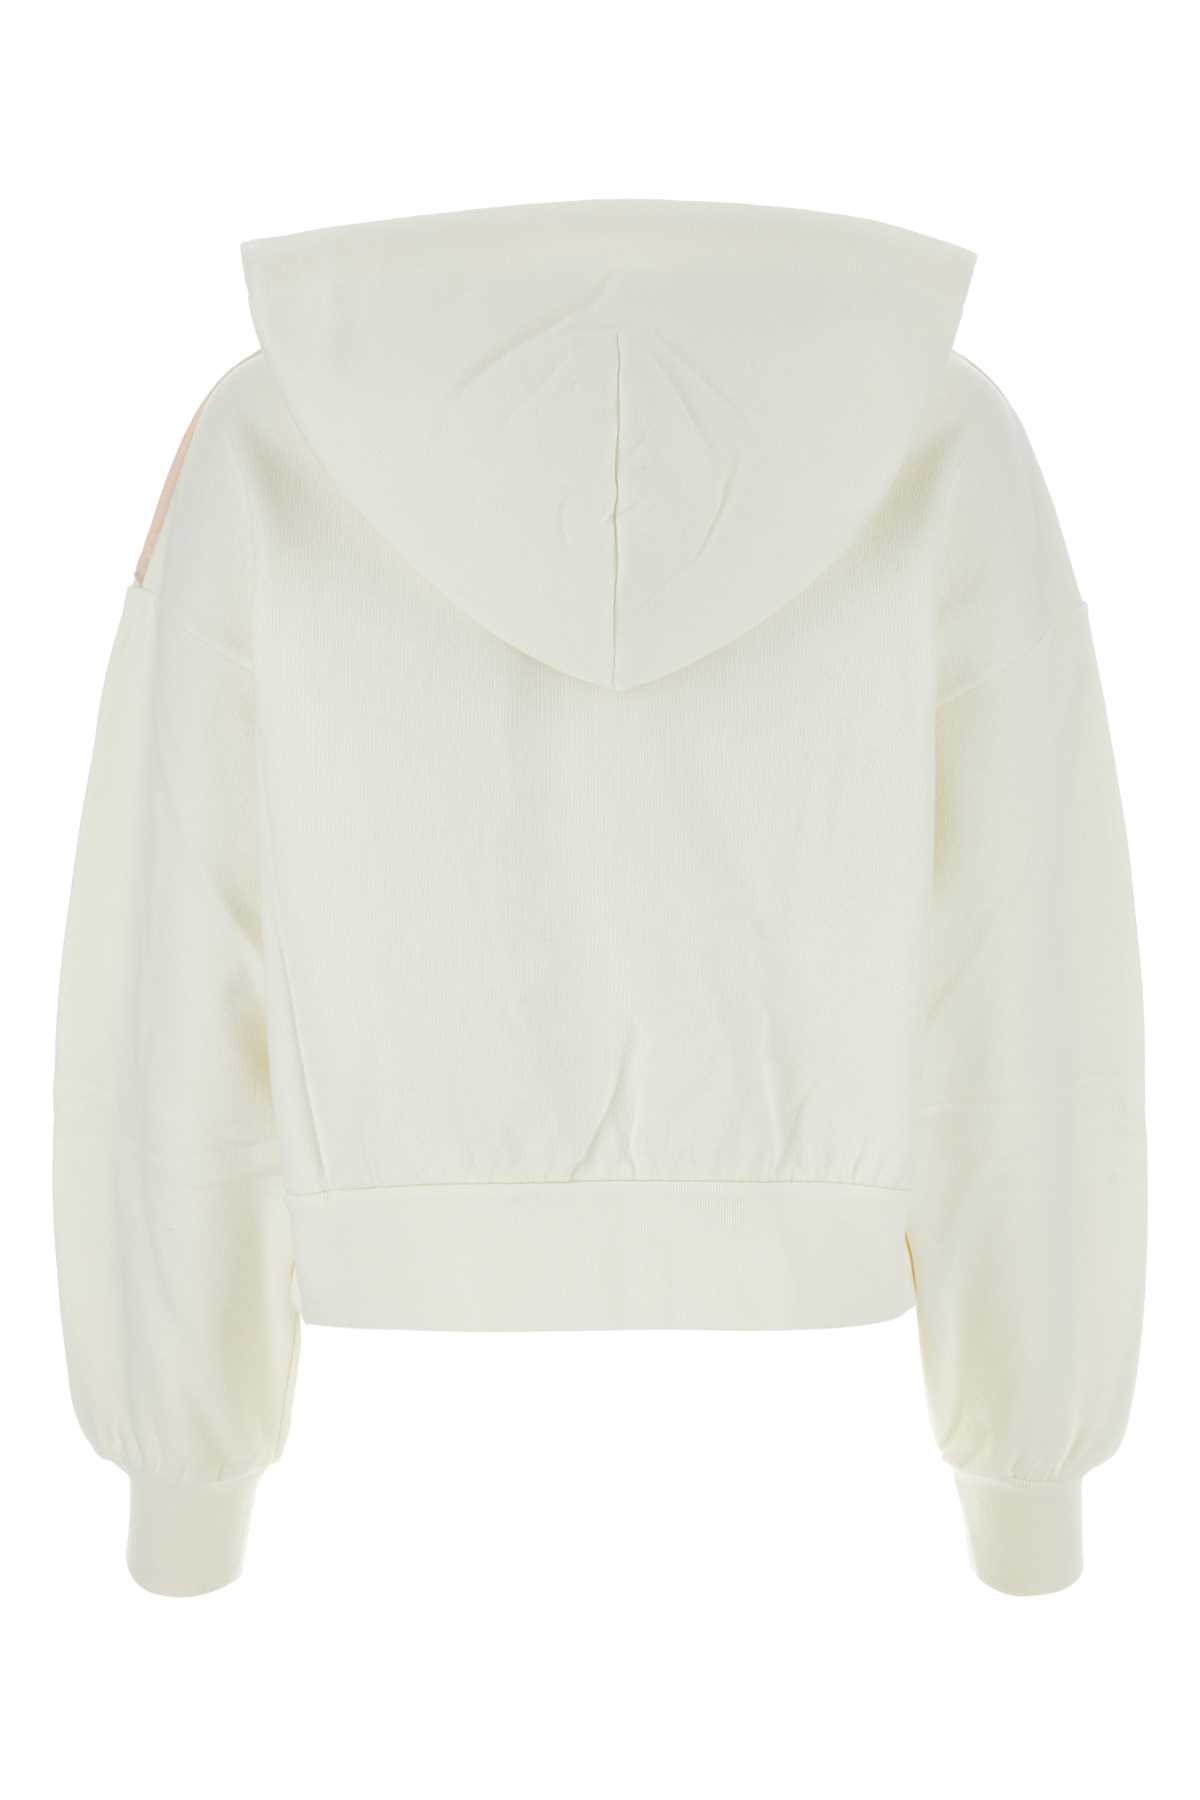 Shop Gucci White Jersey Sweatshirt In Sunlightpinkmix